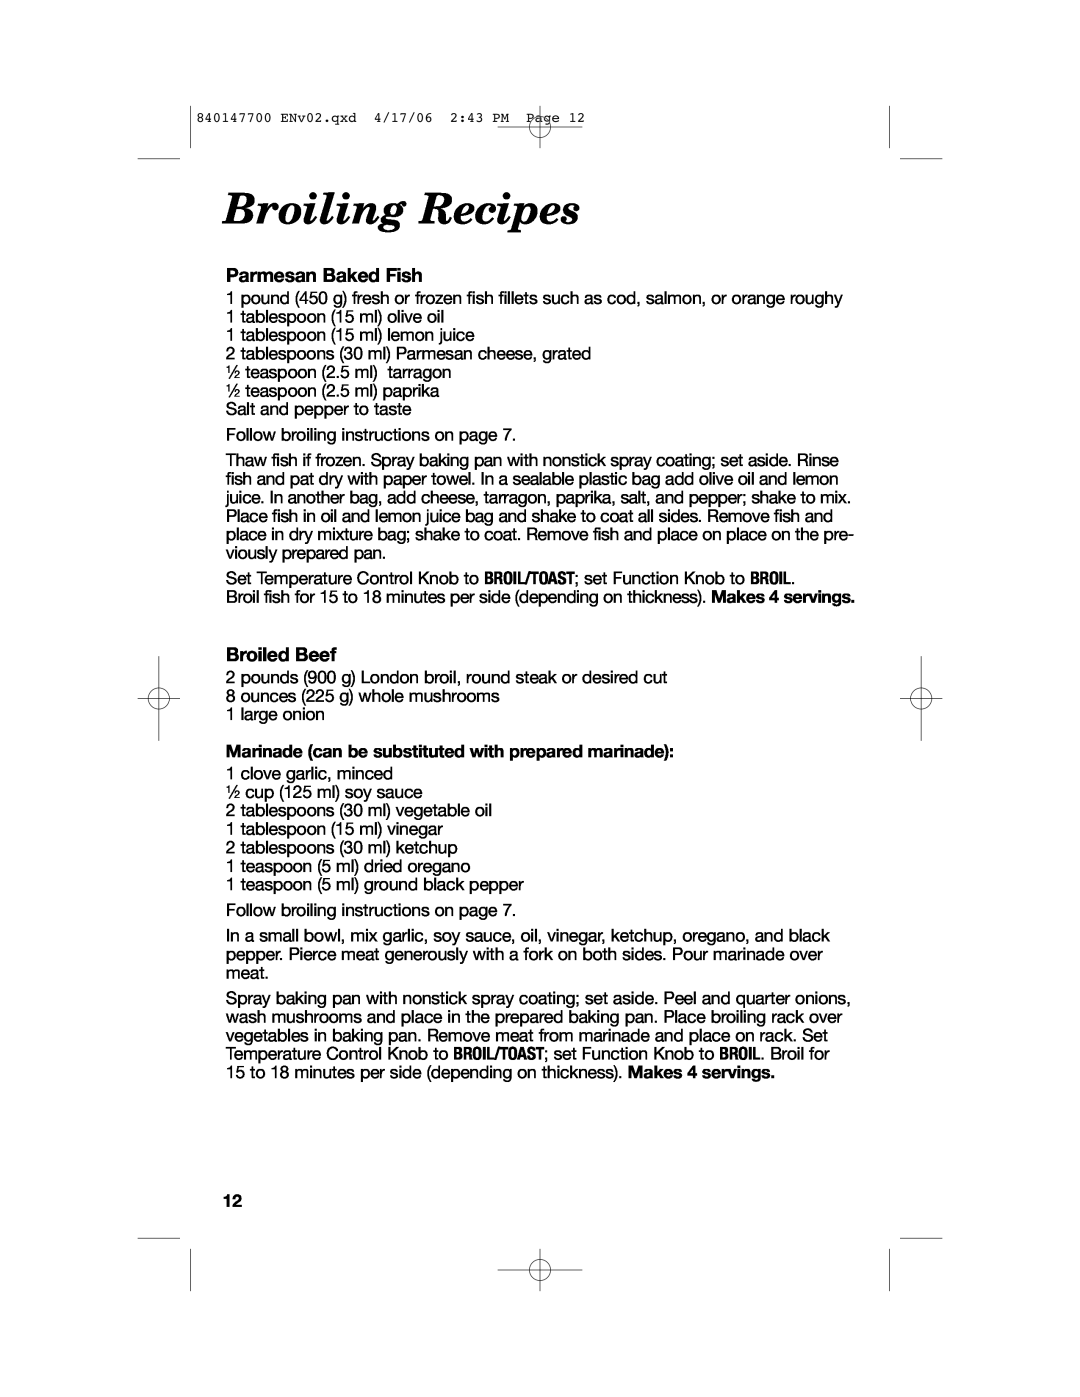 Hamilton Beach 31180 manual Broiling Recipes, Parmesan Baked Fish, Broiled Beef 